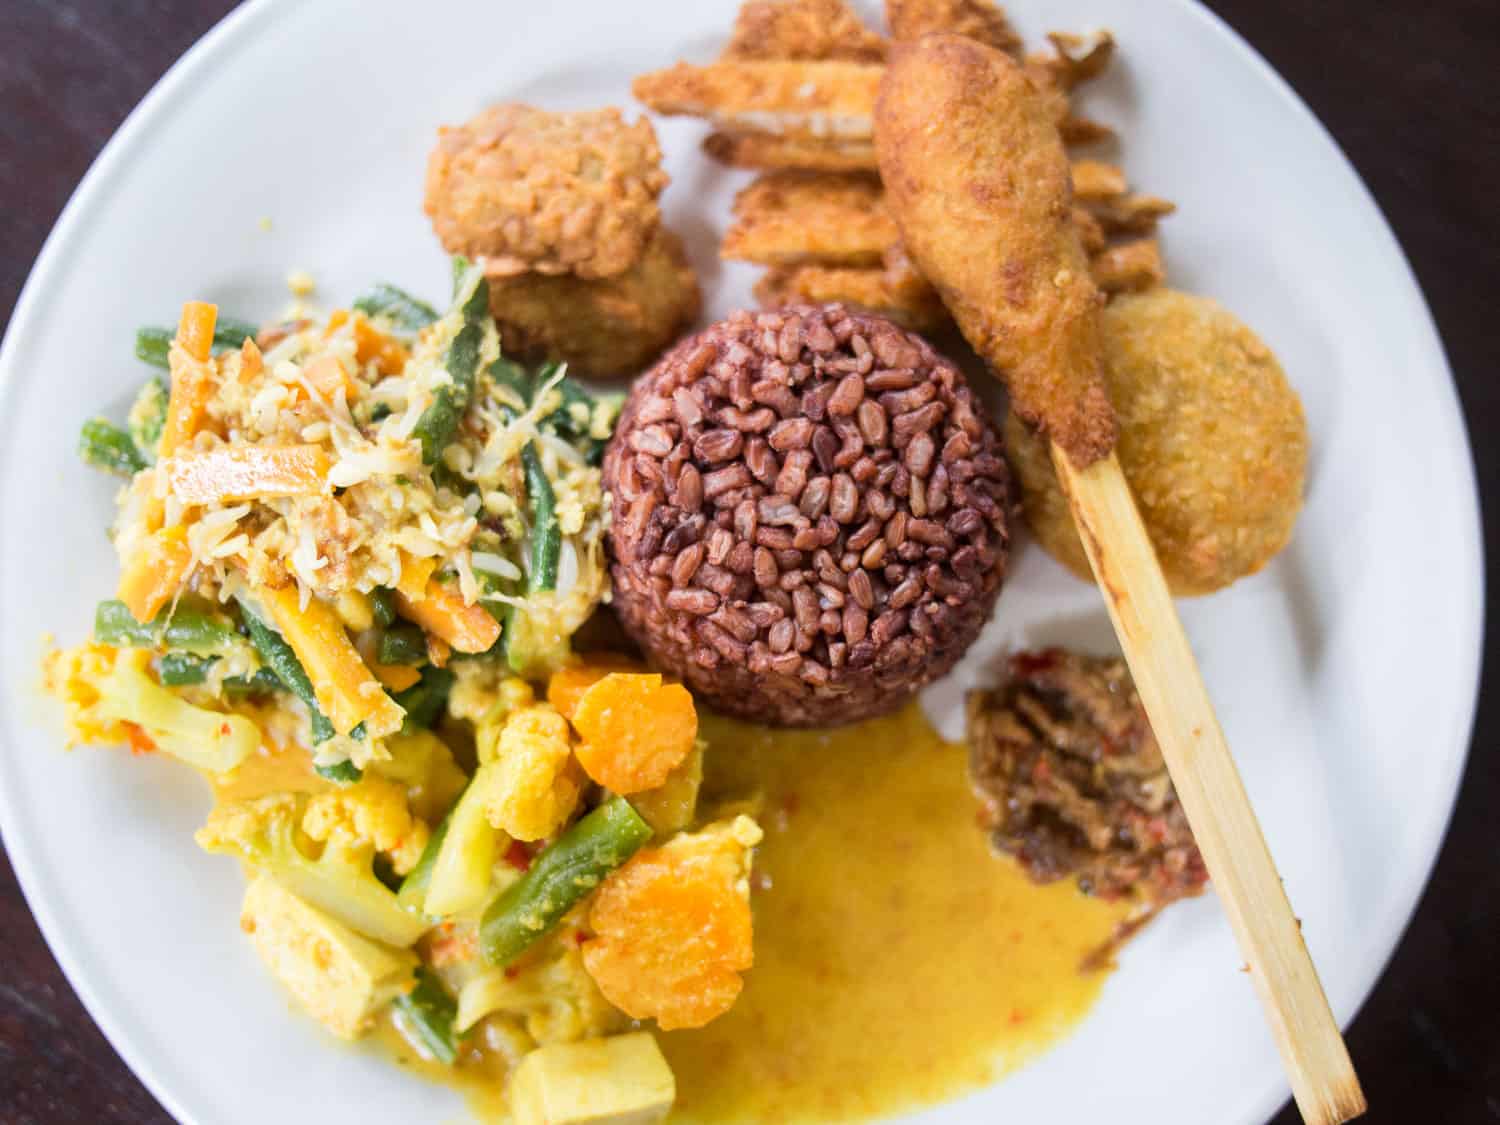 Ubud vegan restaurants - nasi campur at Siboghana Waroeng